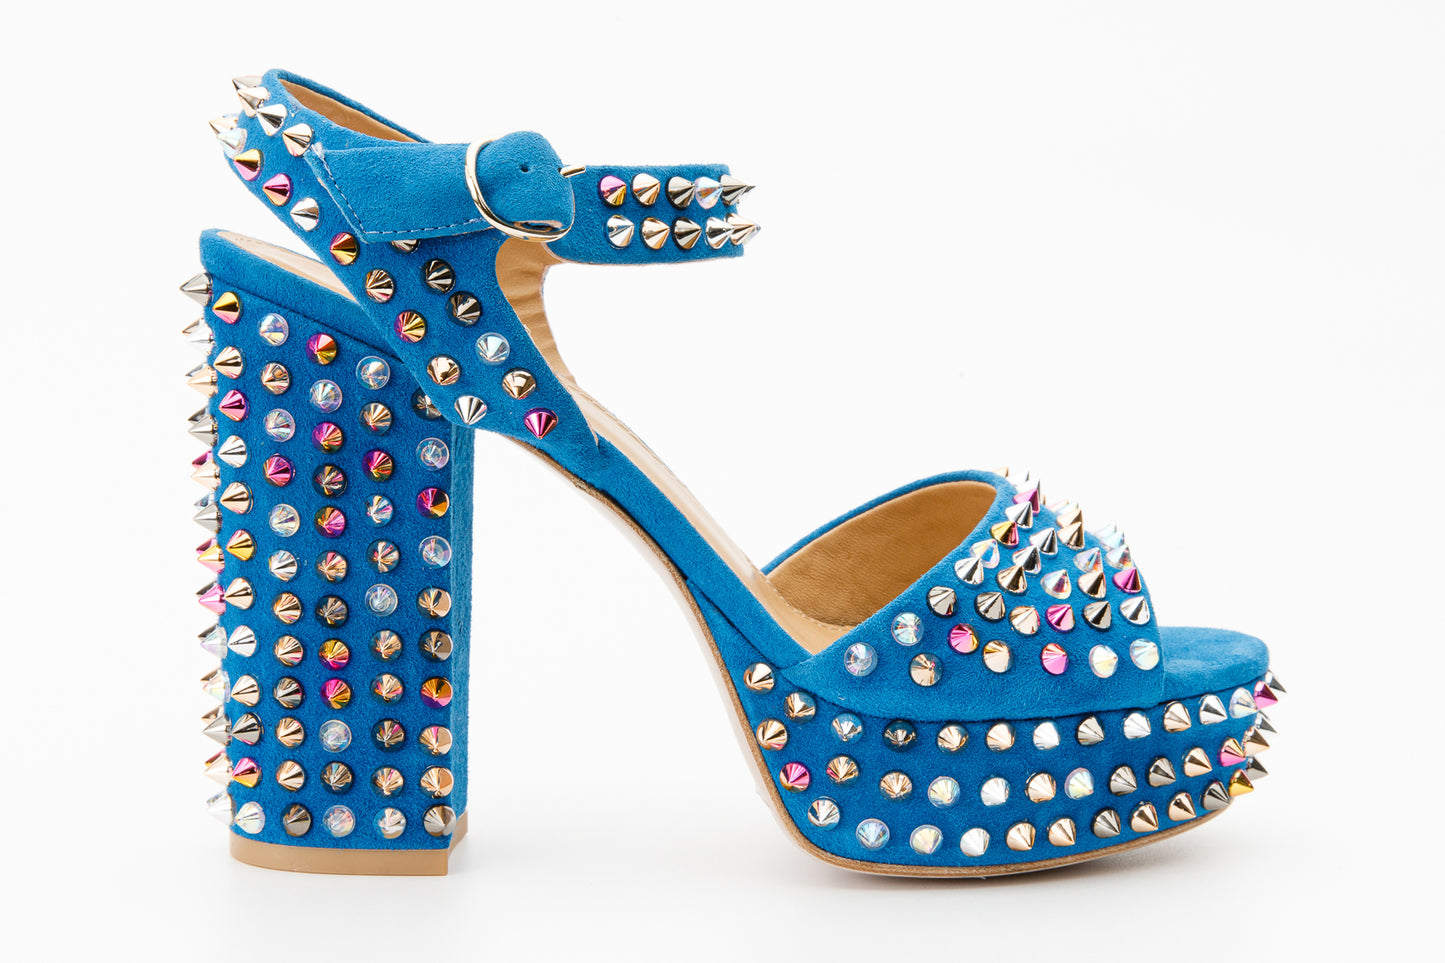 The Tampico Blue Suede Leather Spike Platform Heel Women Sandal